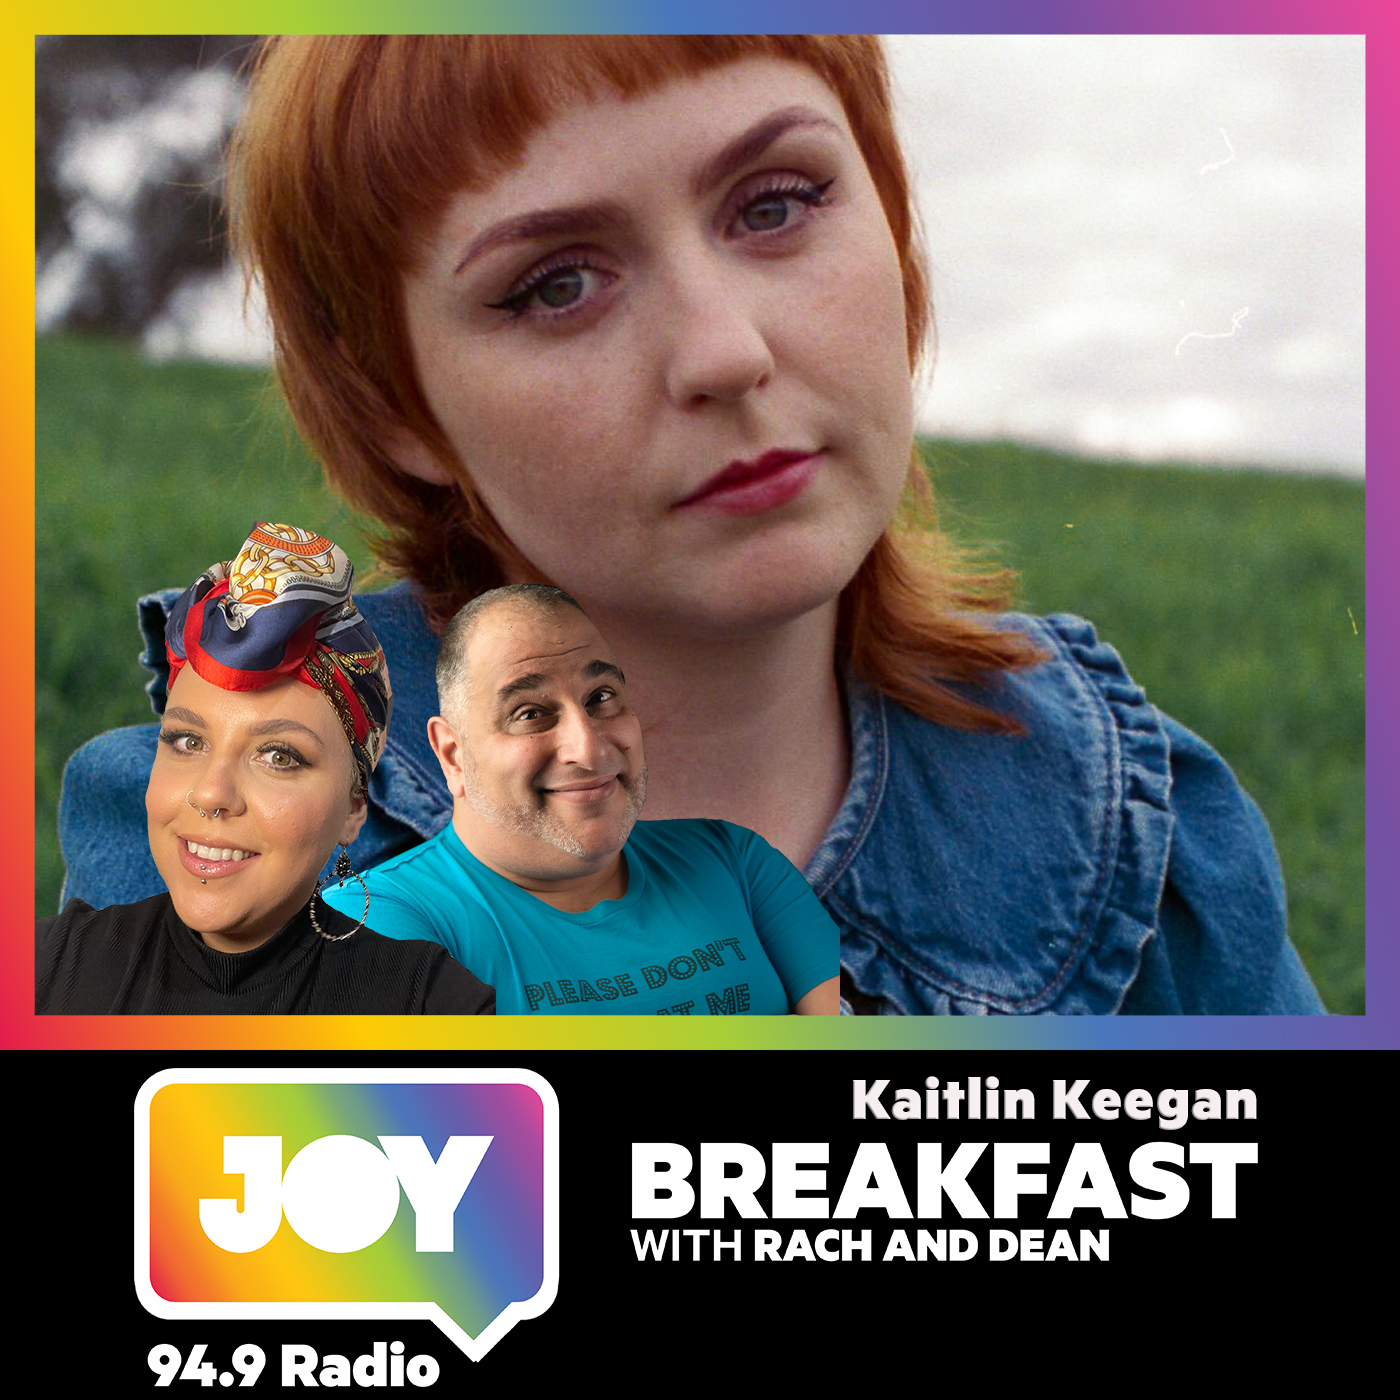 Live Lounge with Kaitlin Keegan | JOY Breakfast